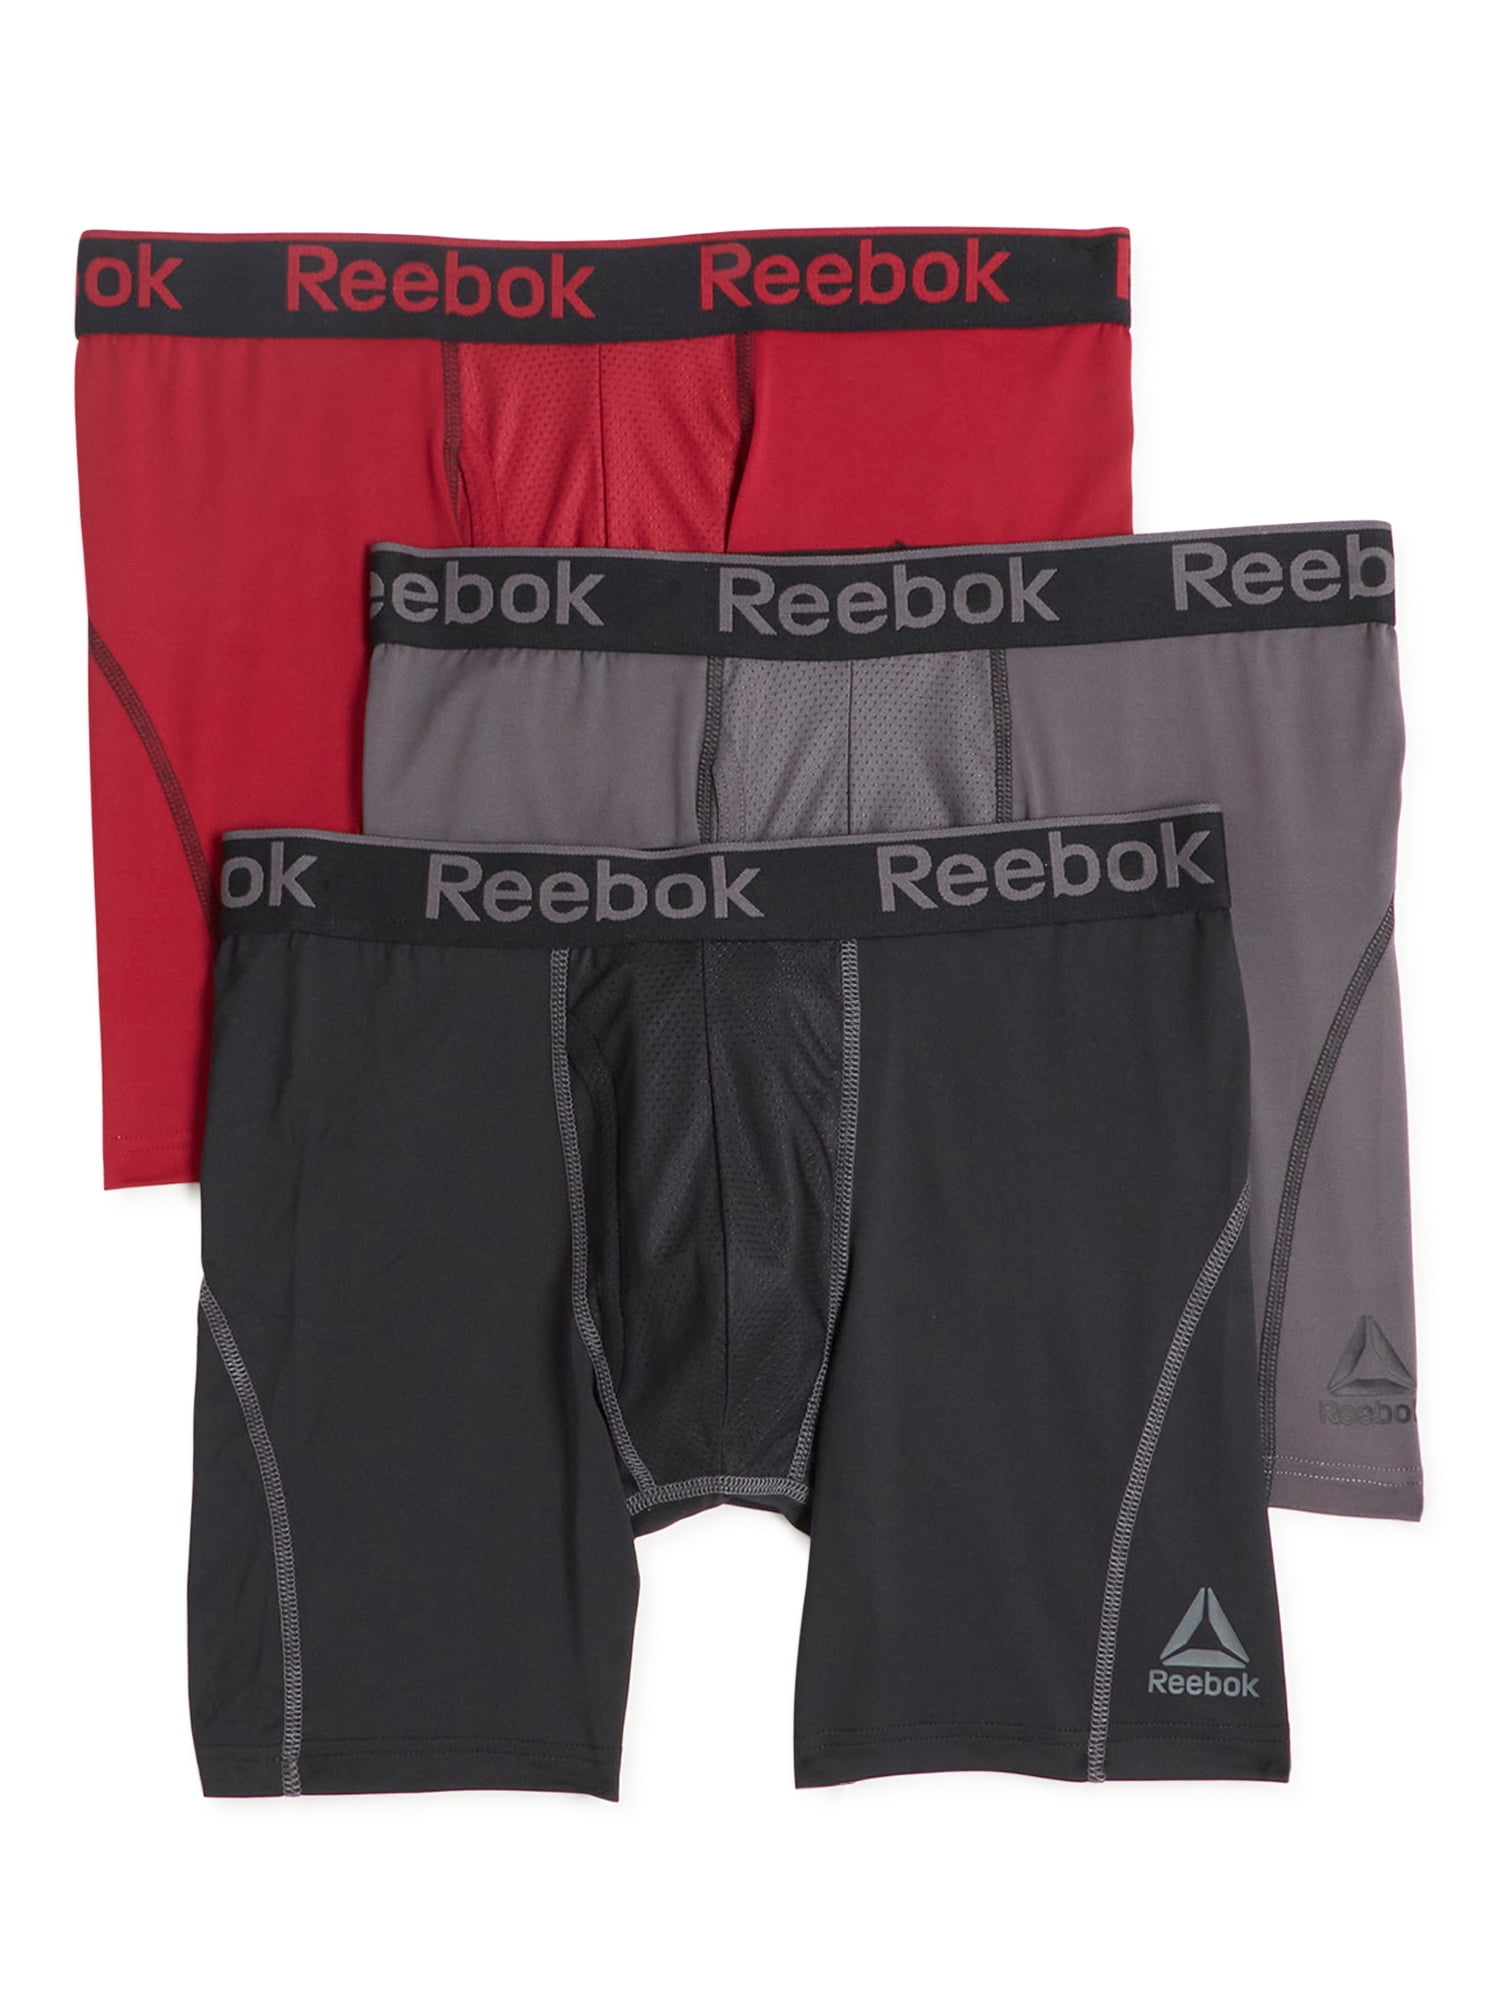 6 Pack Black/Blue/Black 2XL – 4XL Reebok Men’s Underwear – Big and Tall Performance Boxer Briefs Size 3XL